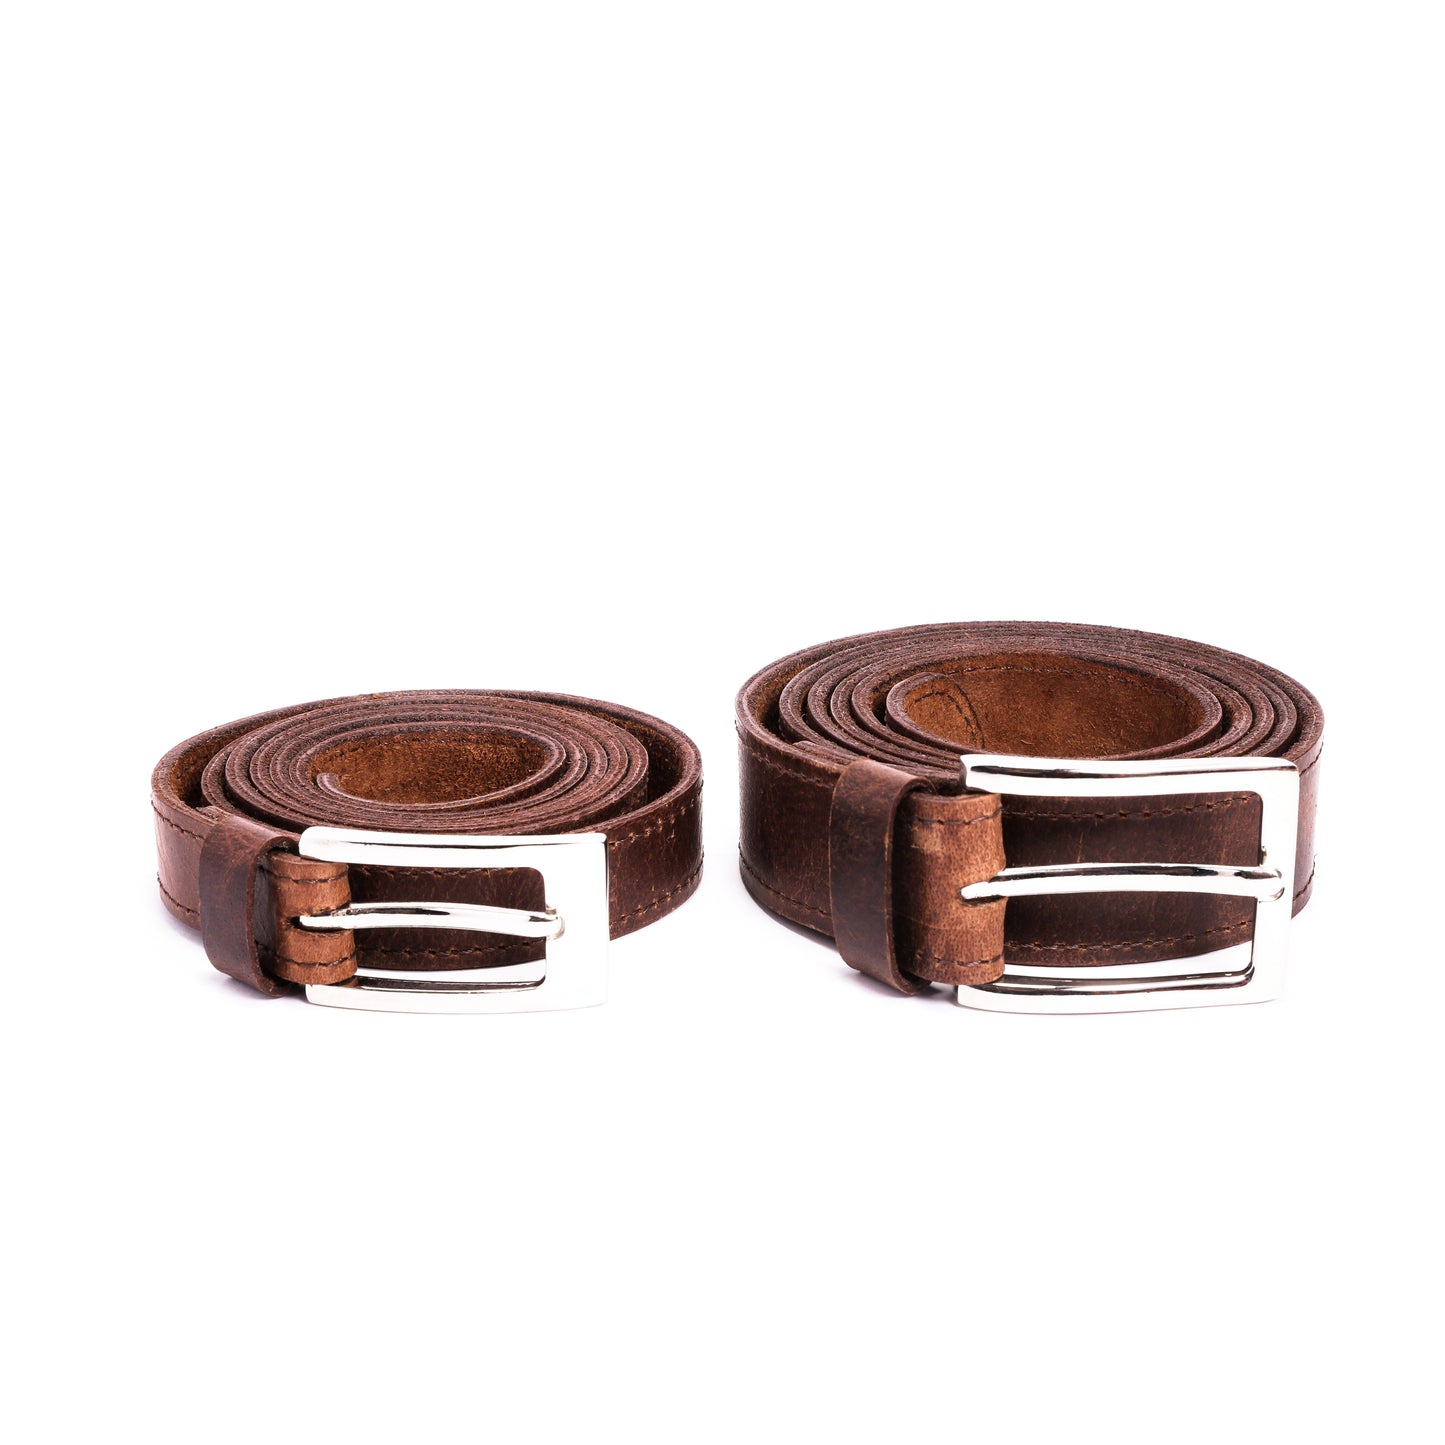 Kuiper - Leather Mens Belt - Nickel